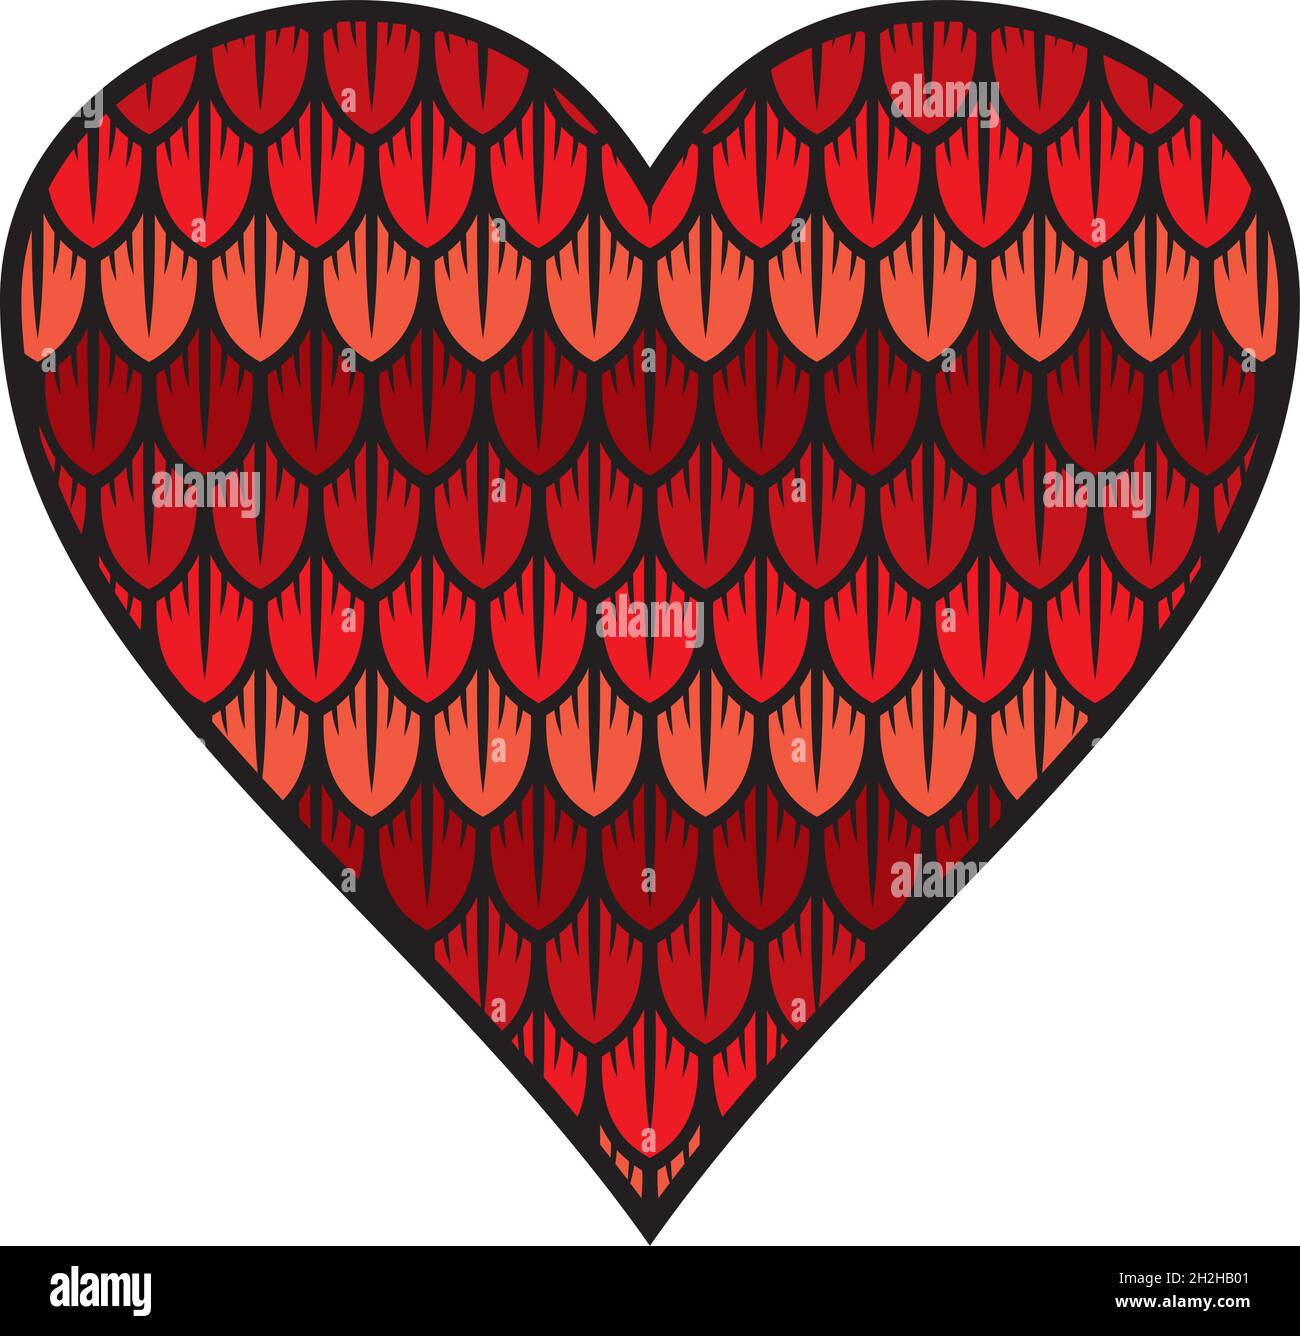 Dragon scales heart vector illustration Stock Vector